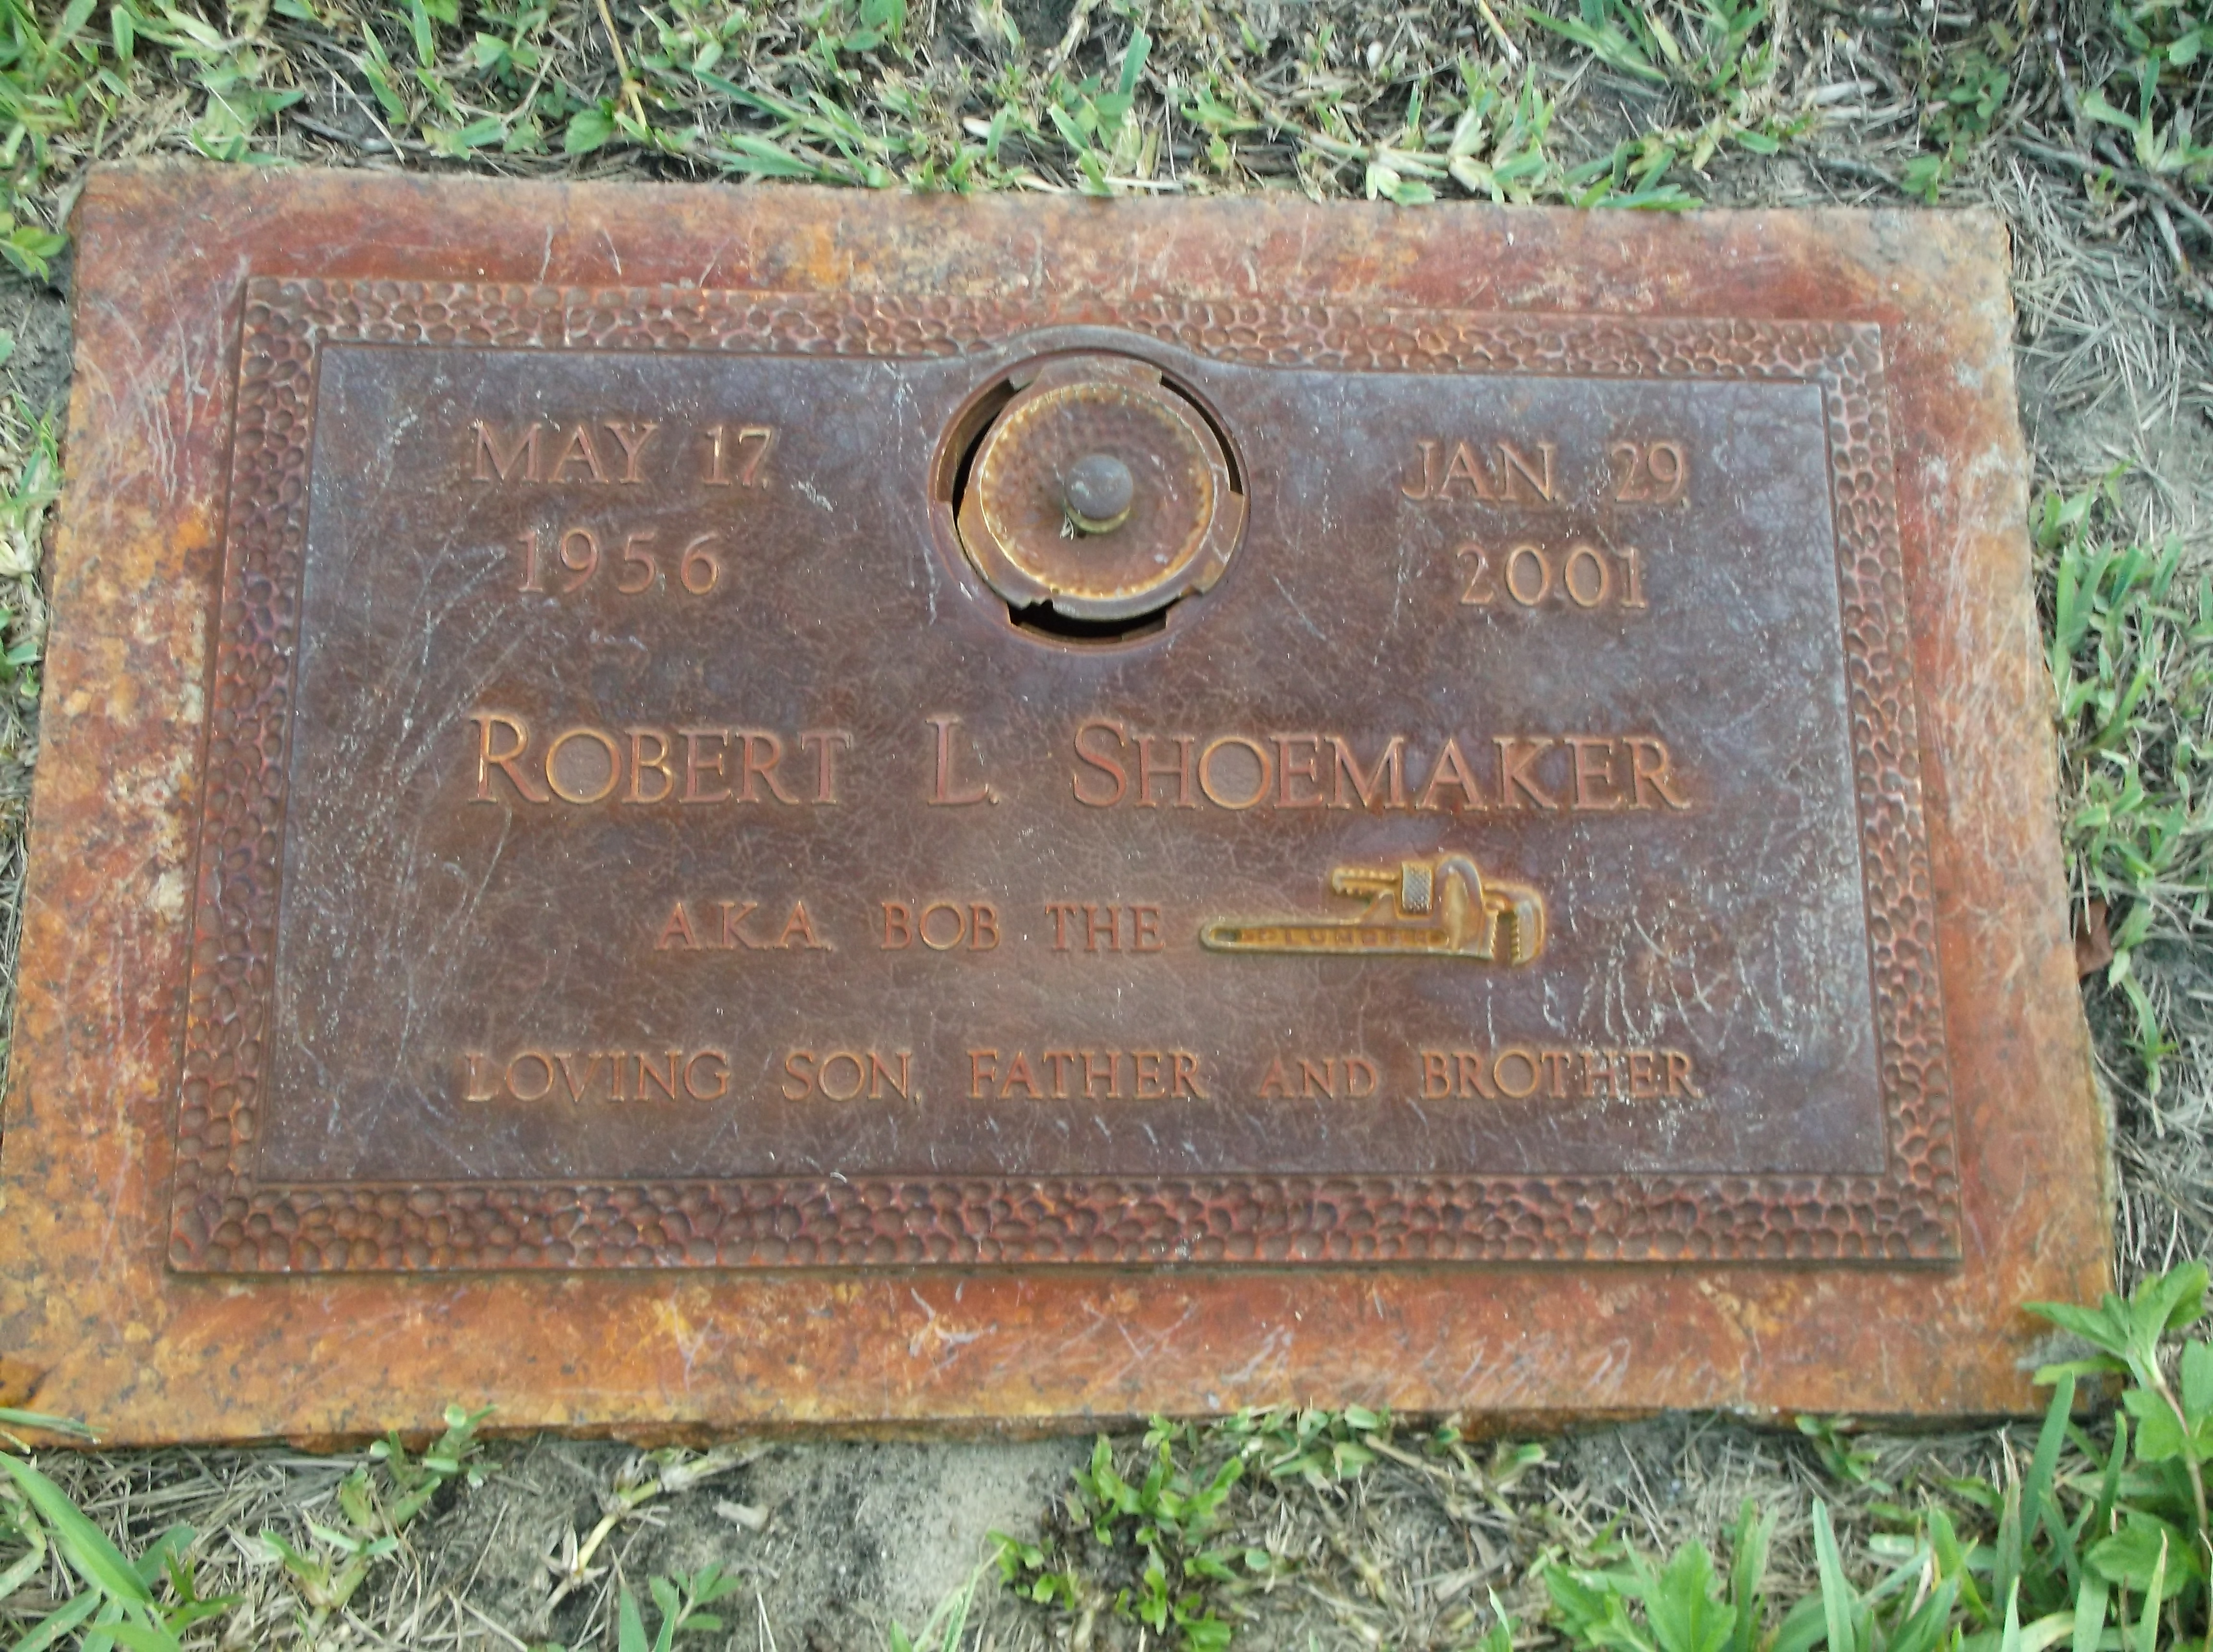 Robert L "Bob the Plumber" Shoemaker